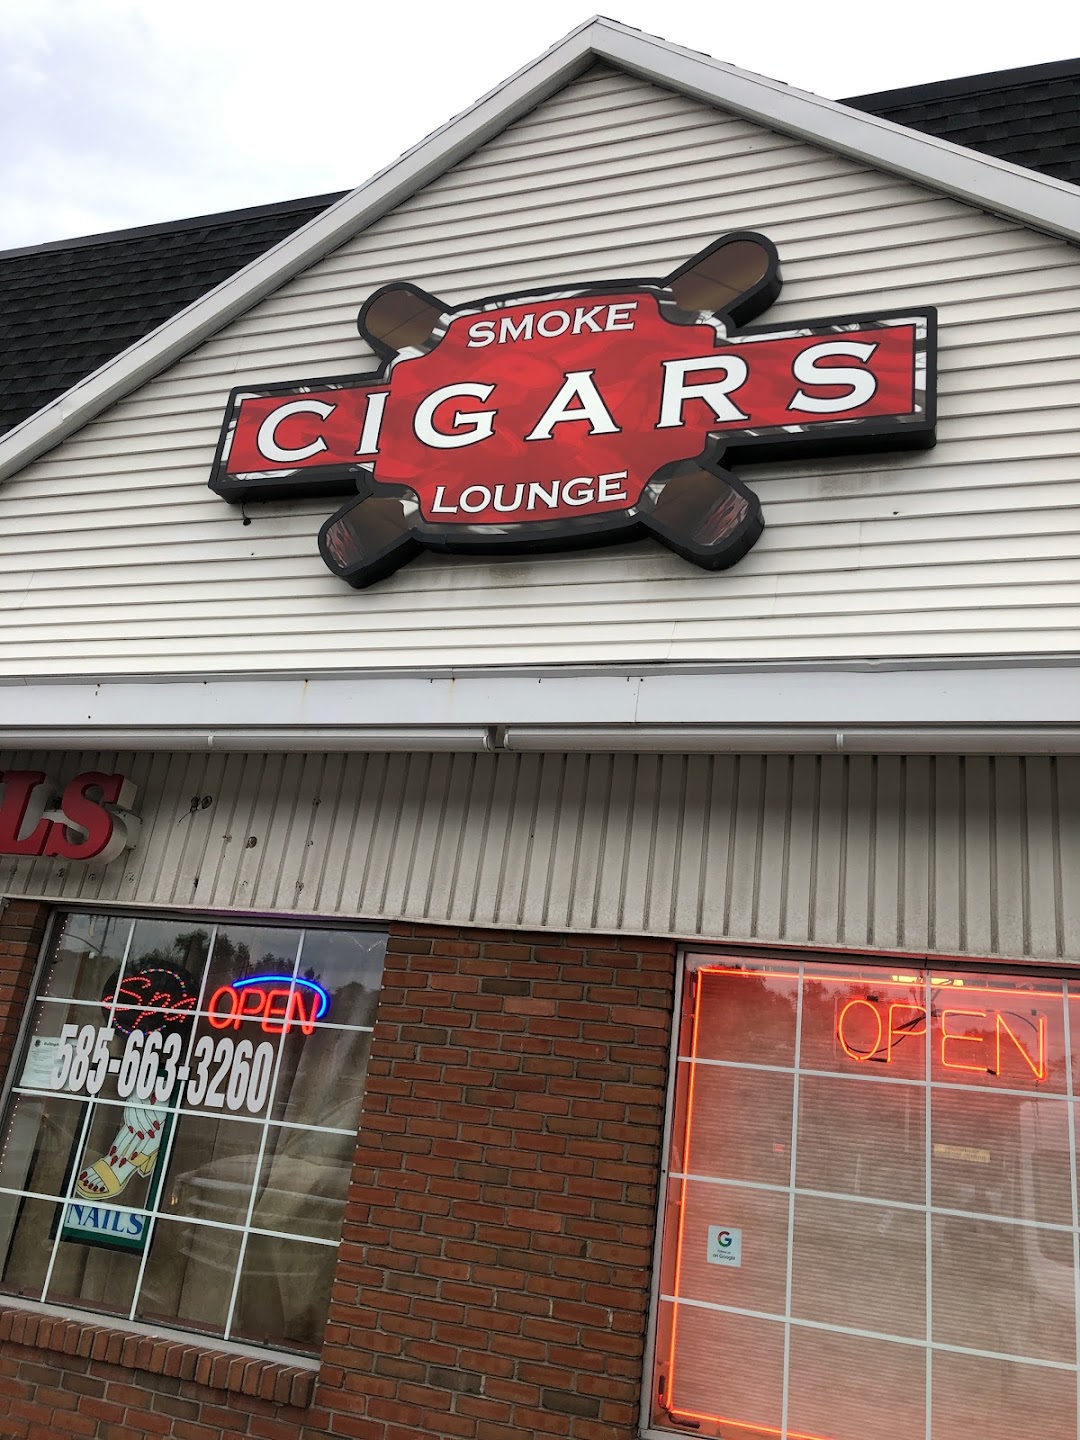 VC Cigar Lounge